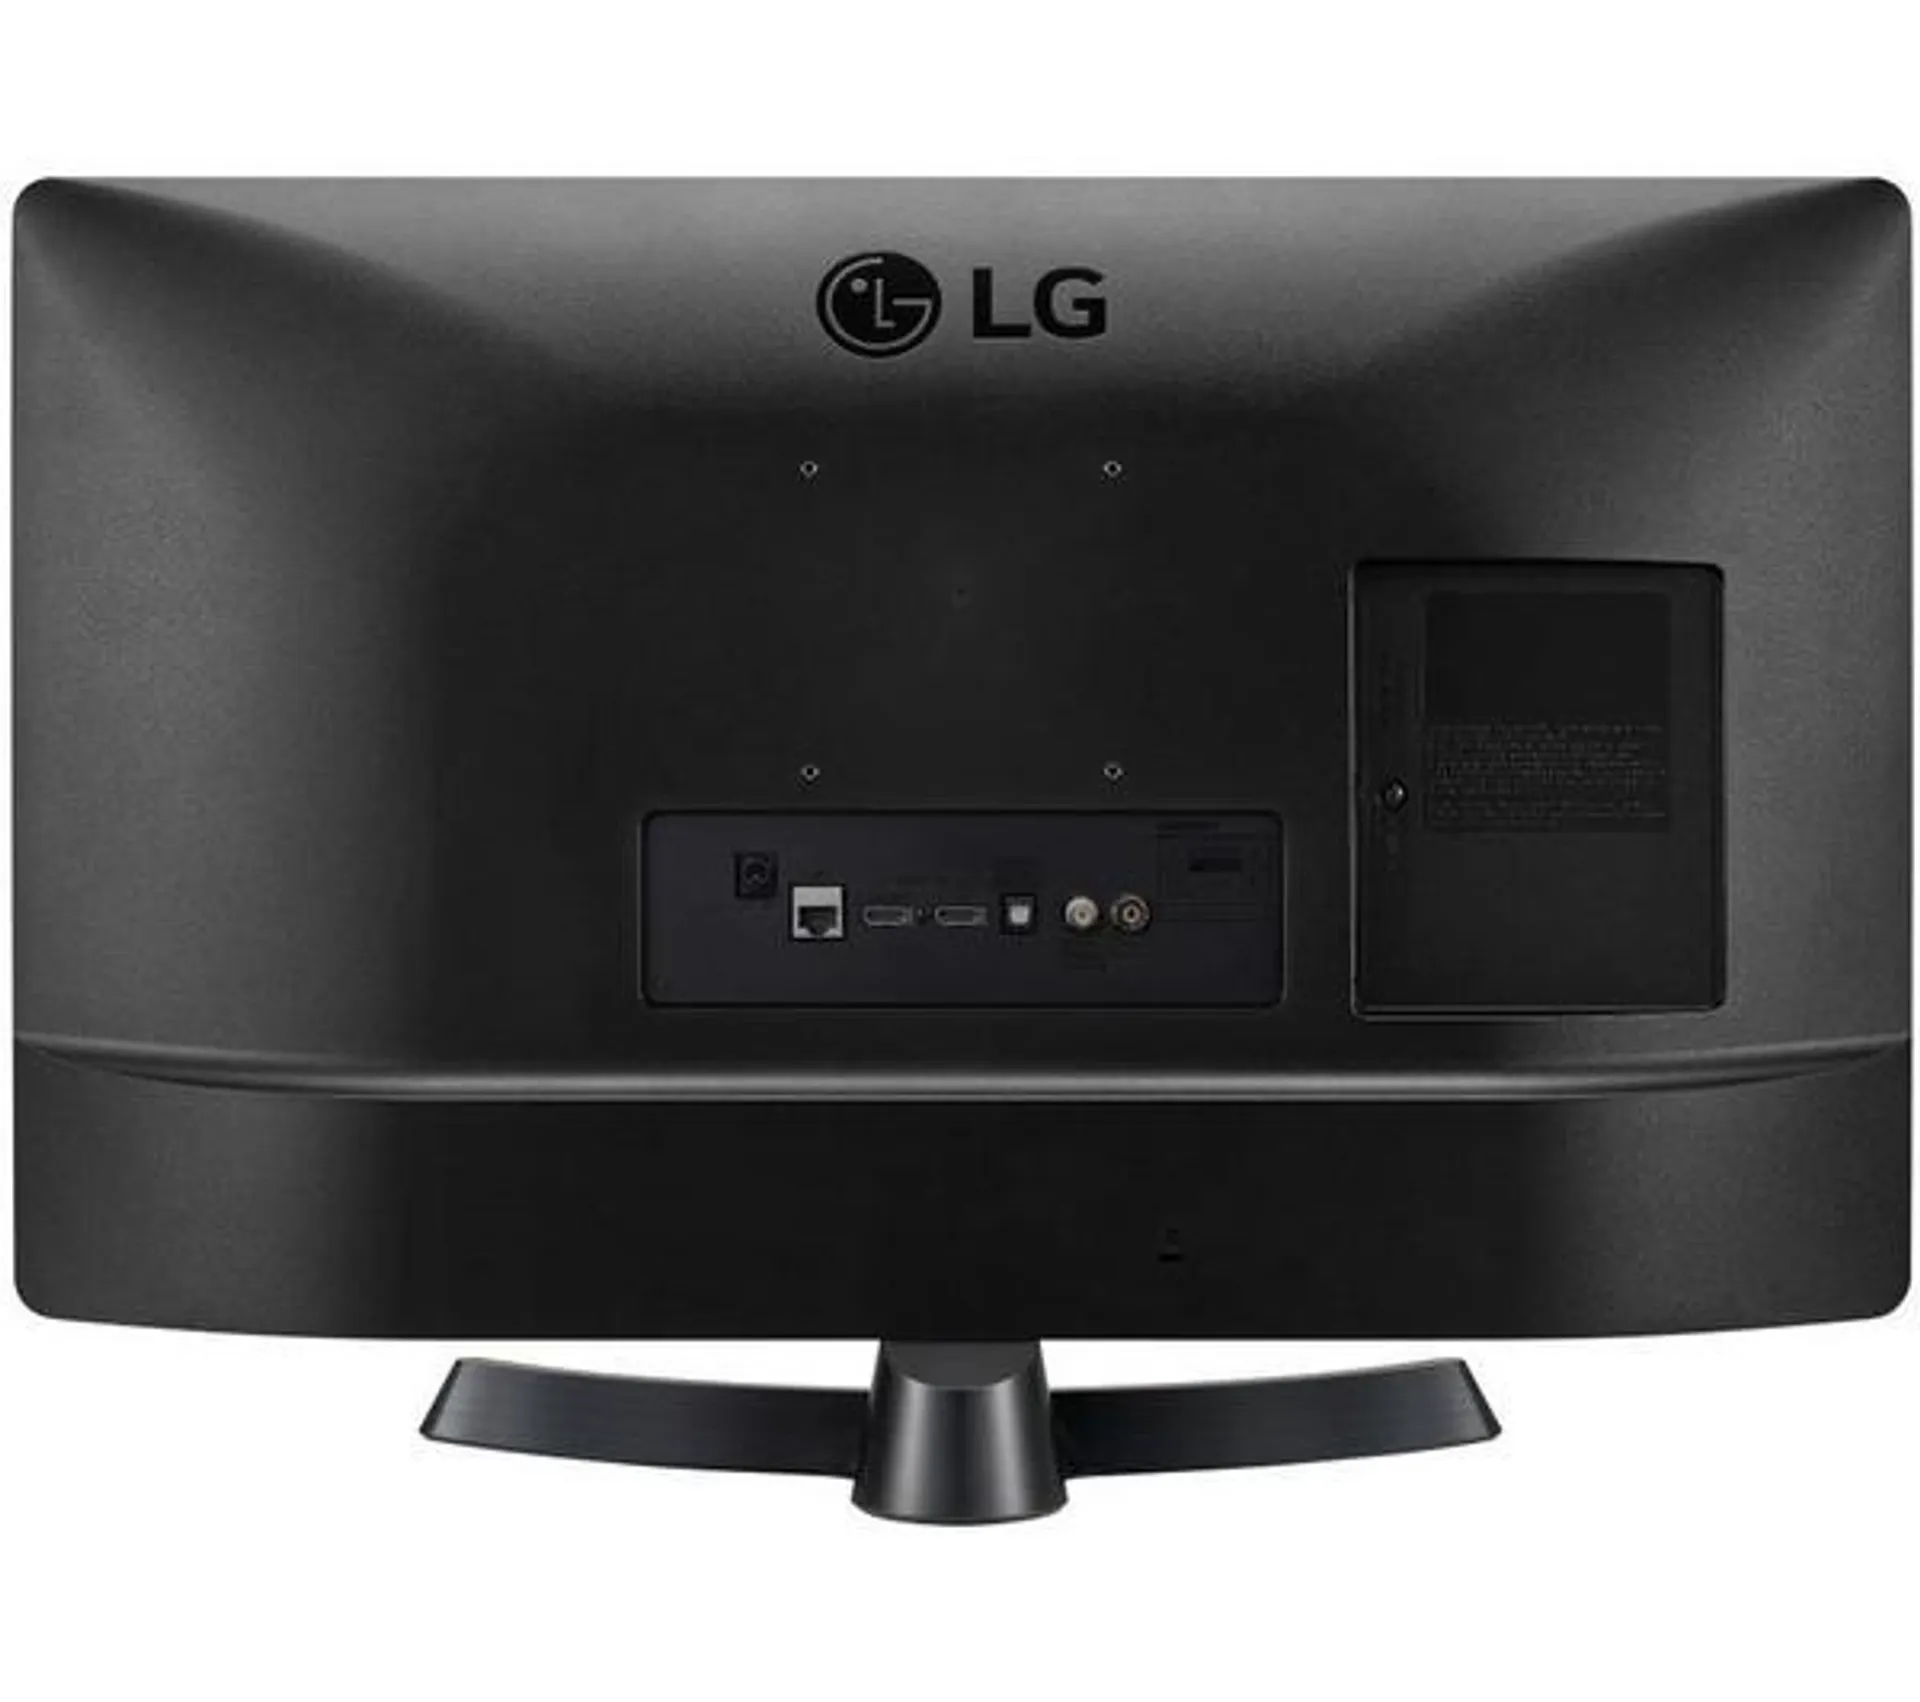 LG 28TQ515S-PZ 28" Smart HD Ready LED TV Monitor